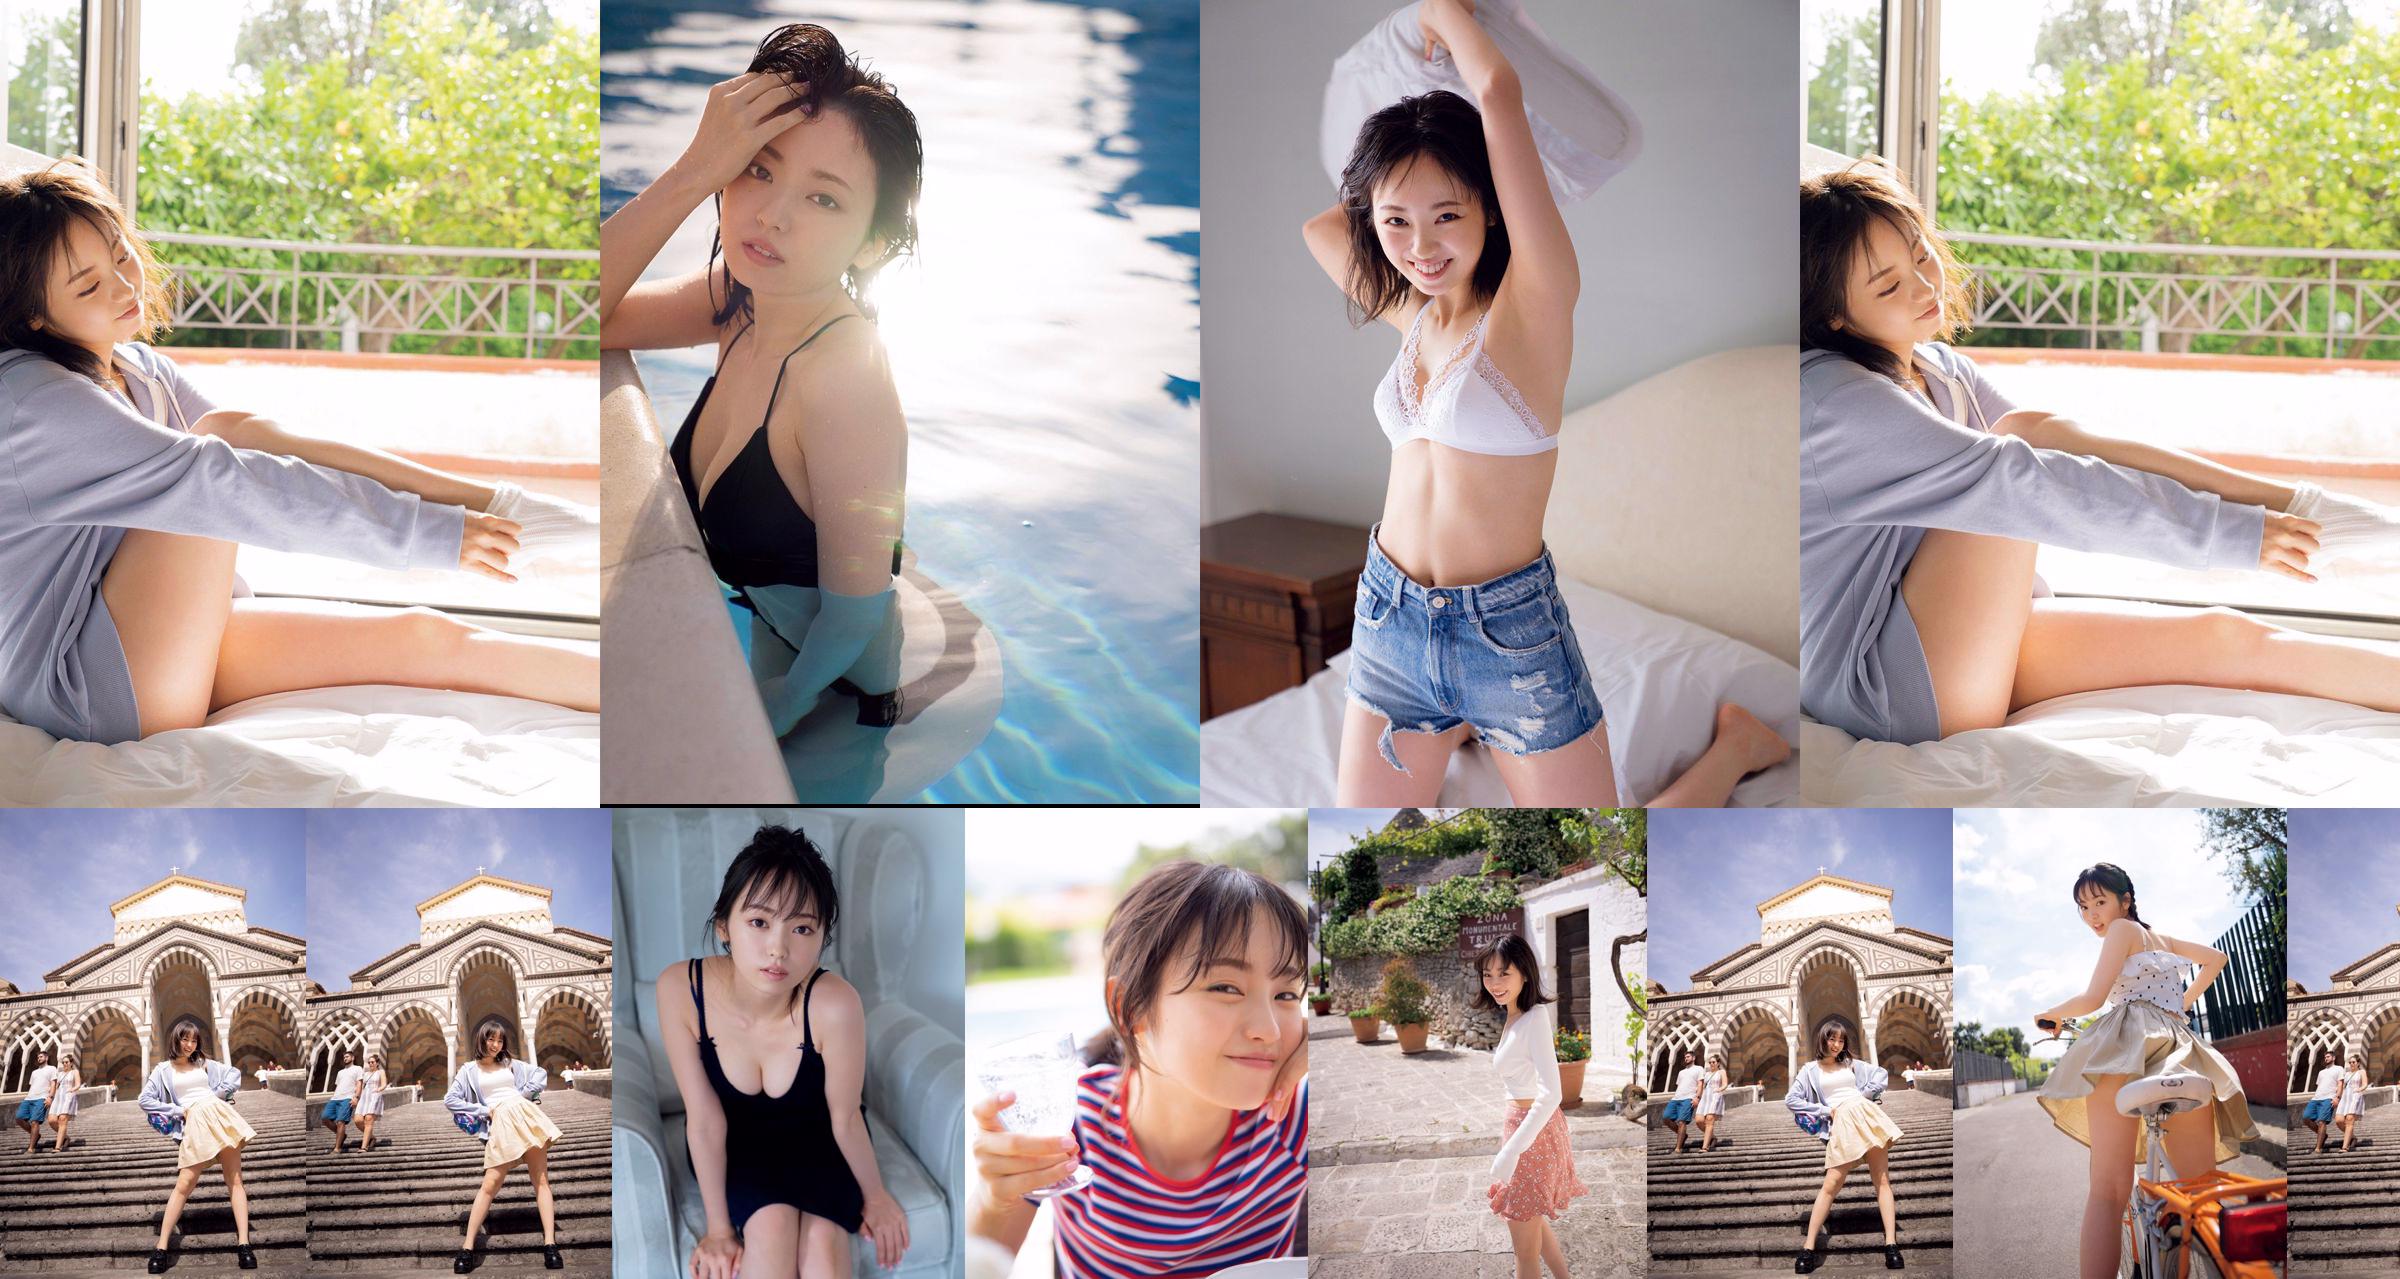 [FRIDAY] Keyakizaka46, Yui Imaizumi "Swimsuit & Lingerie of" First and Last! "" Photo No.49feb4 Page 3